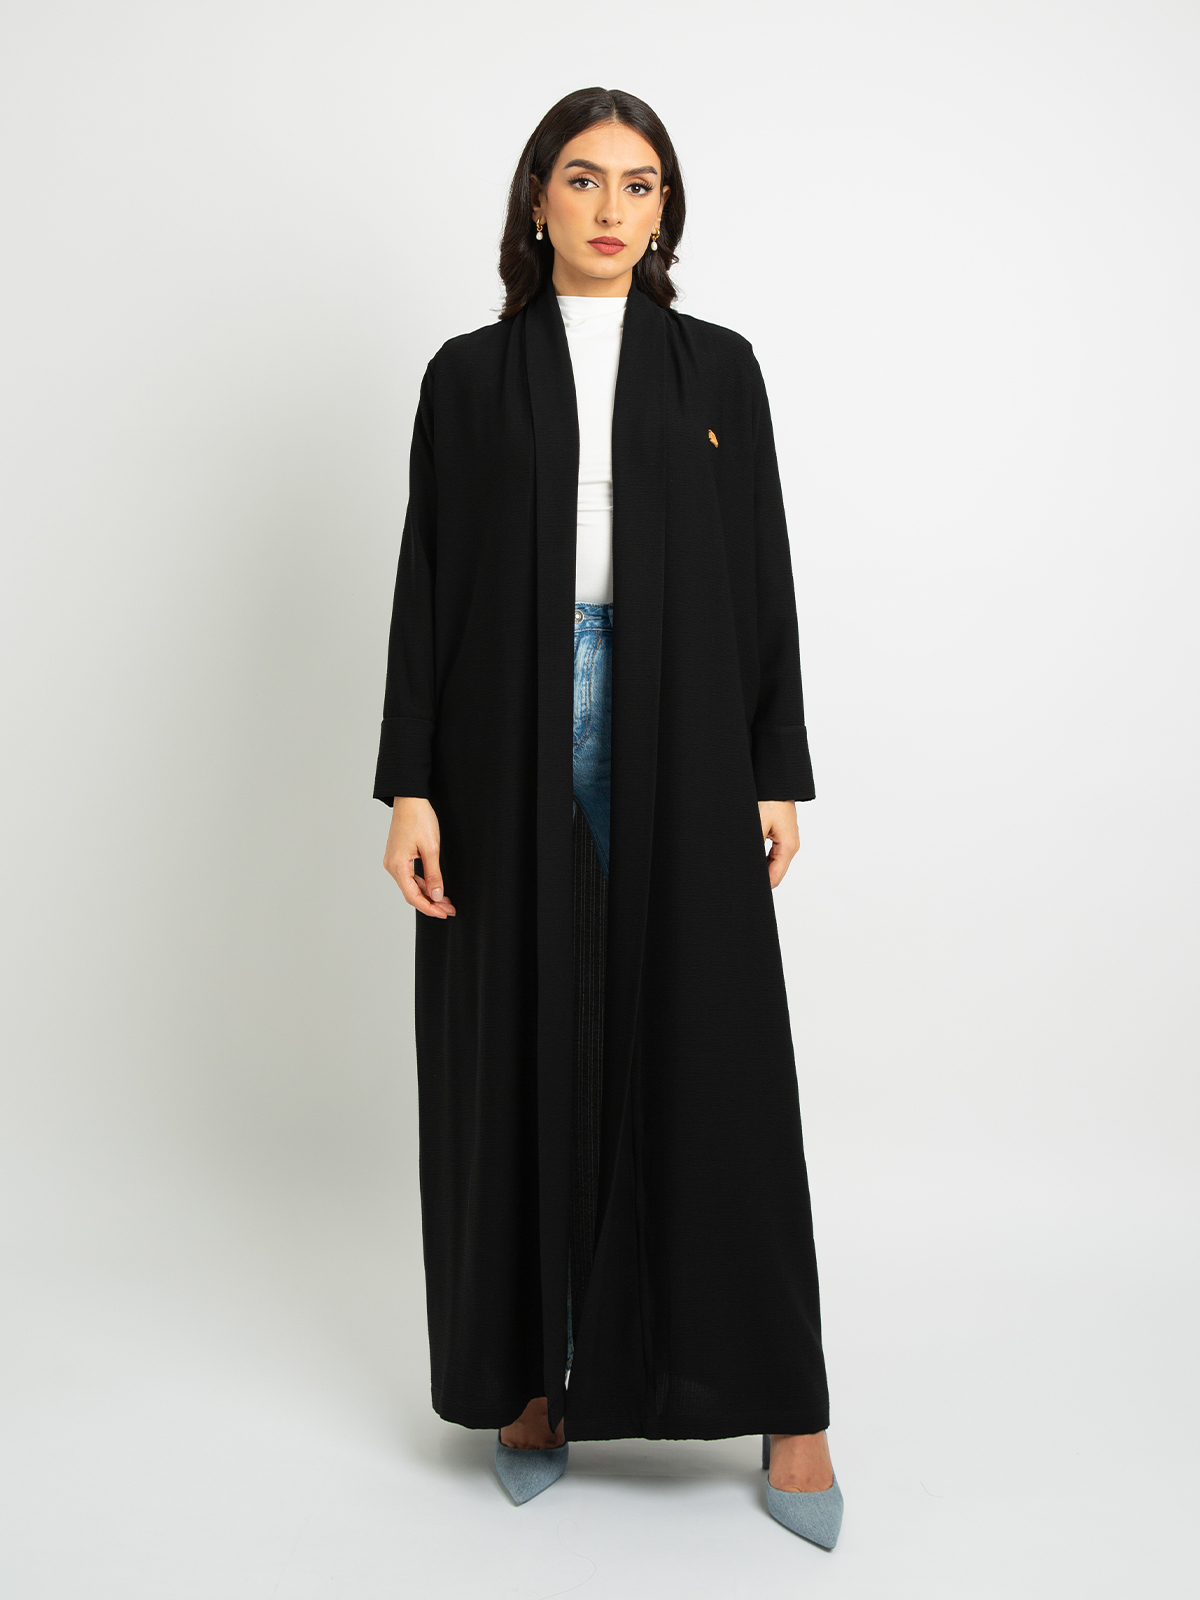 Black - Long Open Practical Abaya in Yoryu Fabric